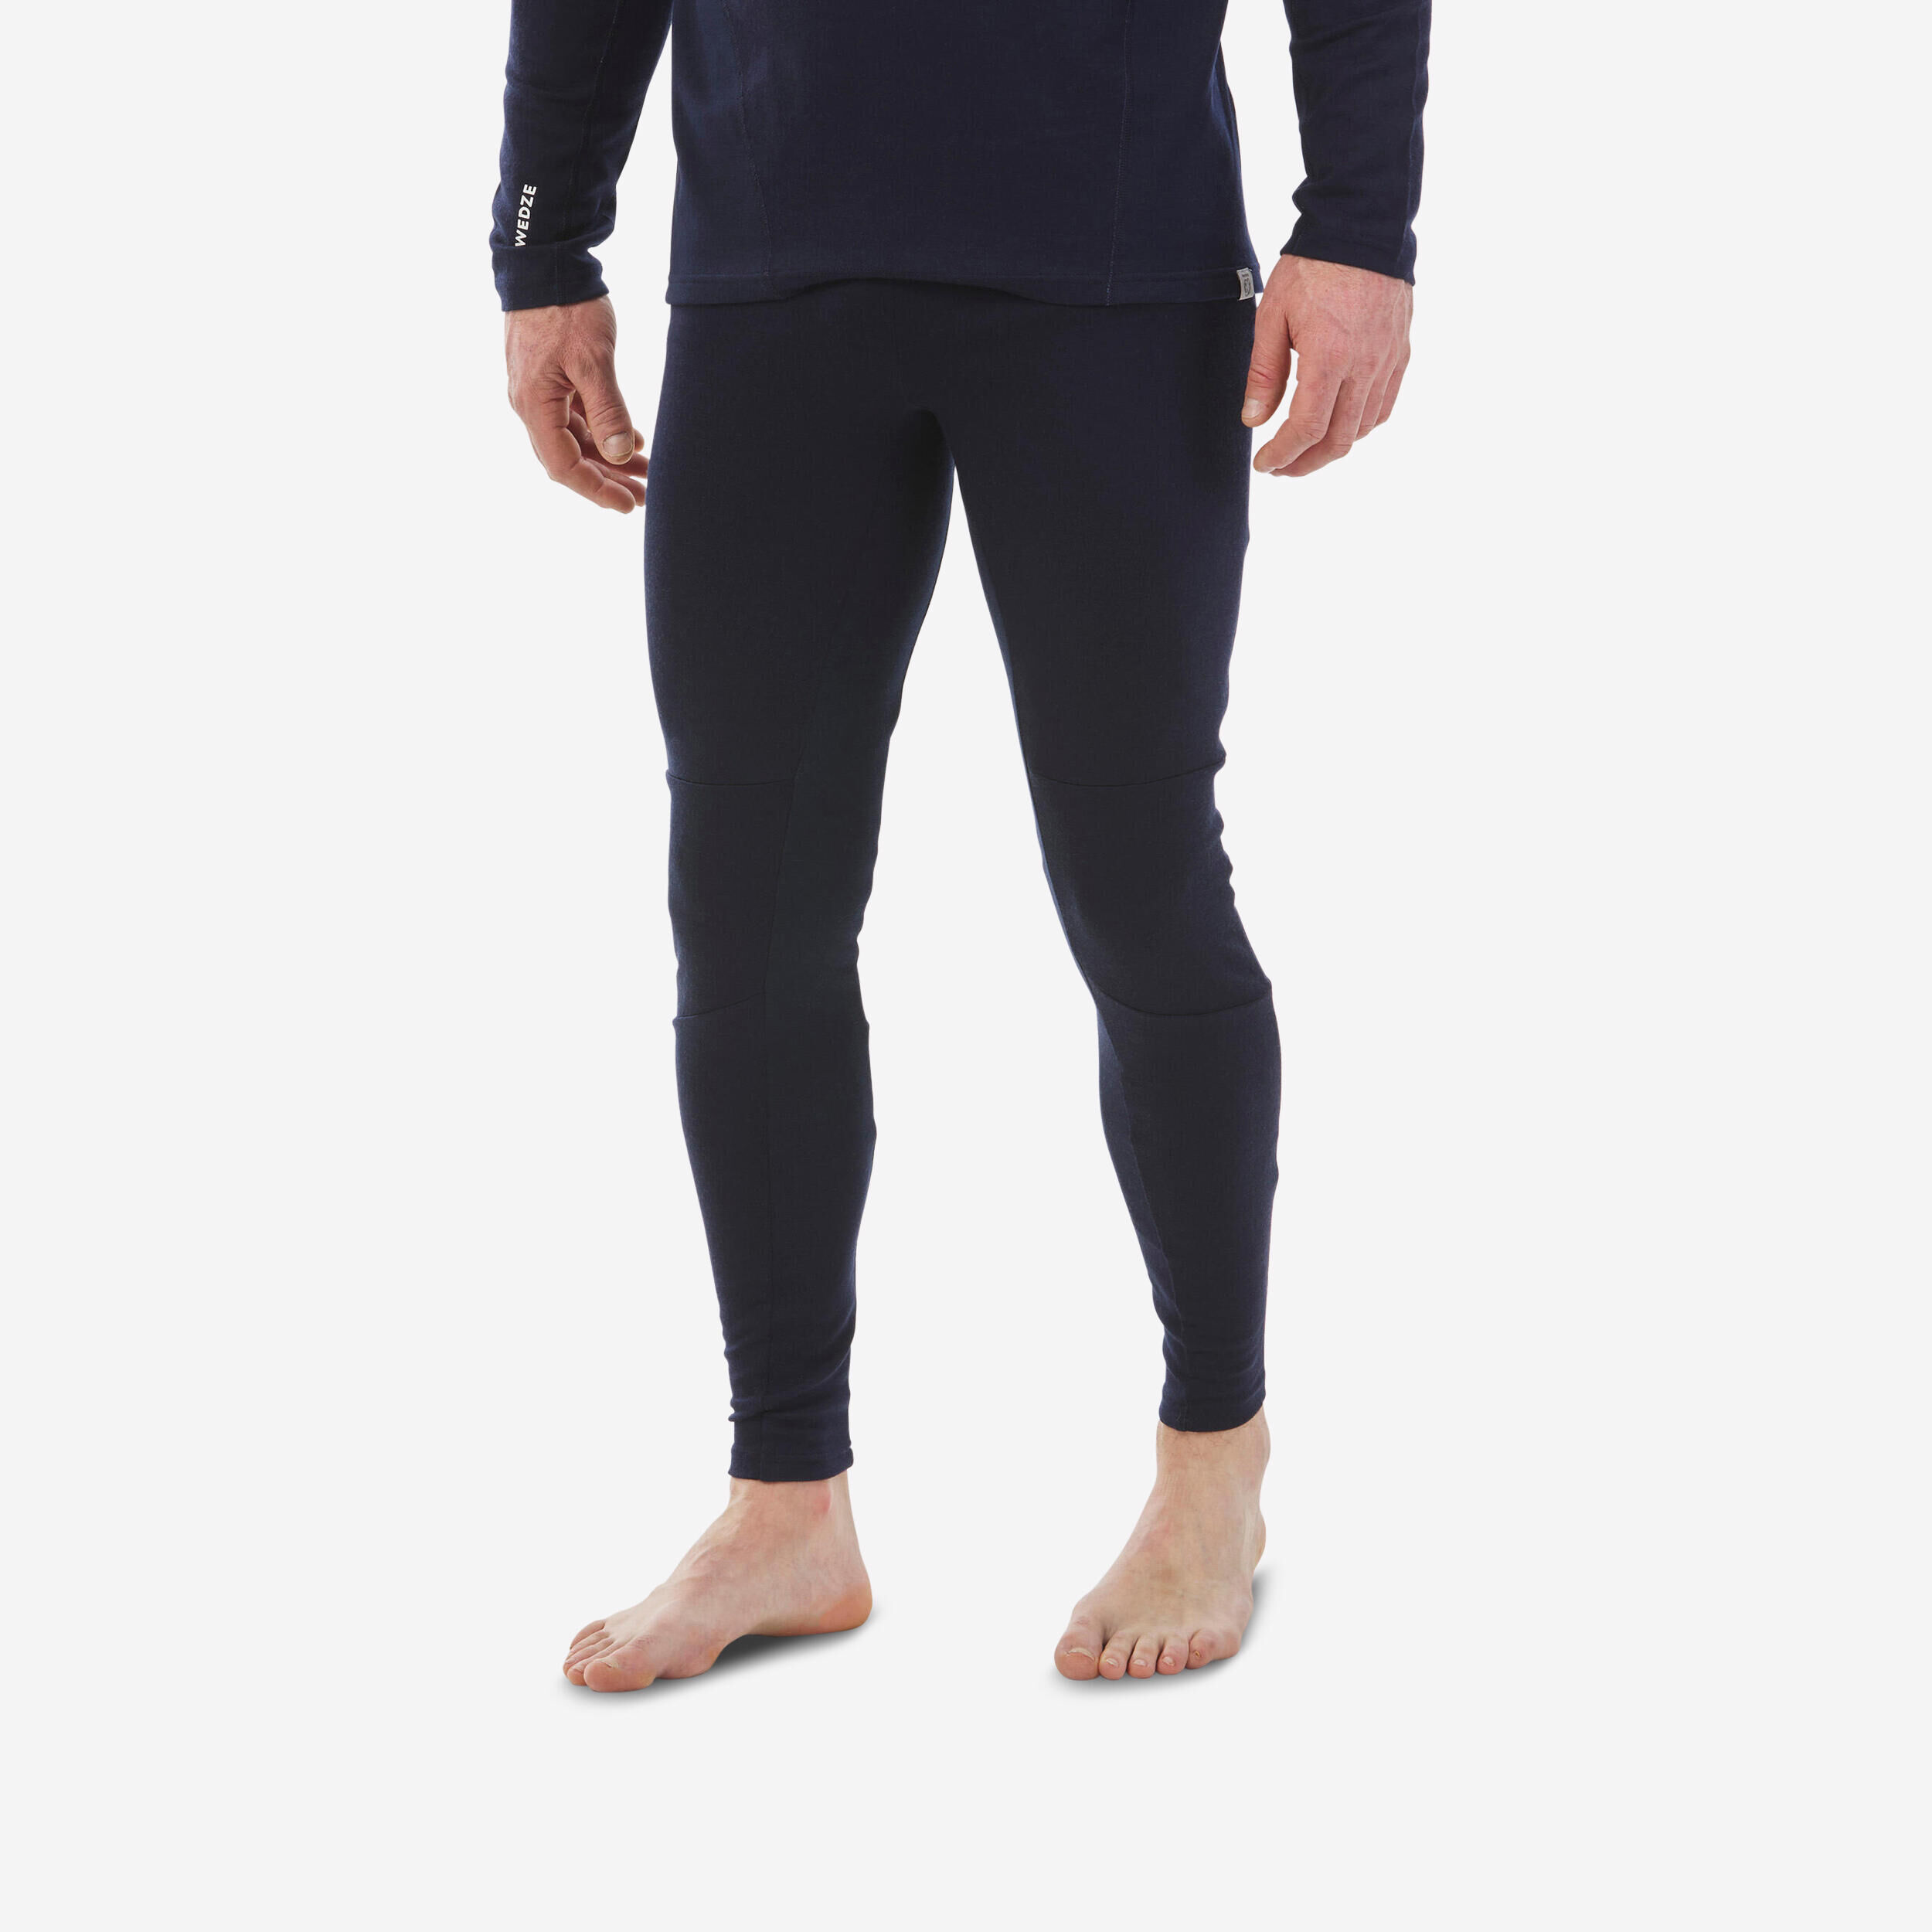 Men's thermal tights